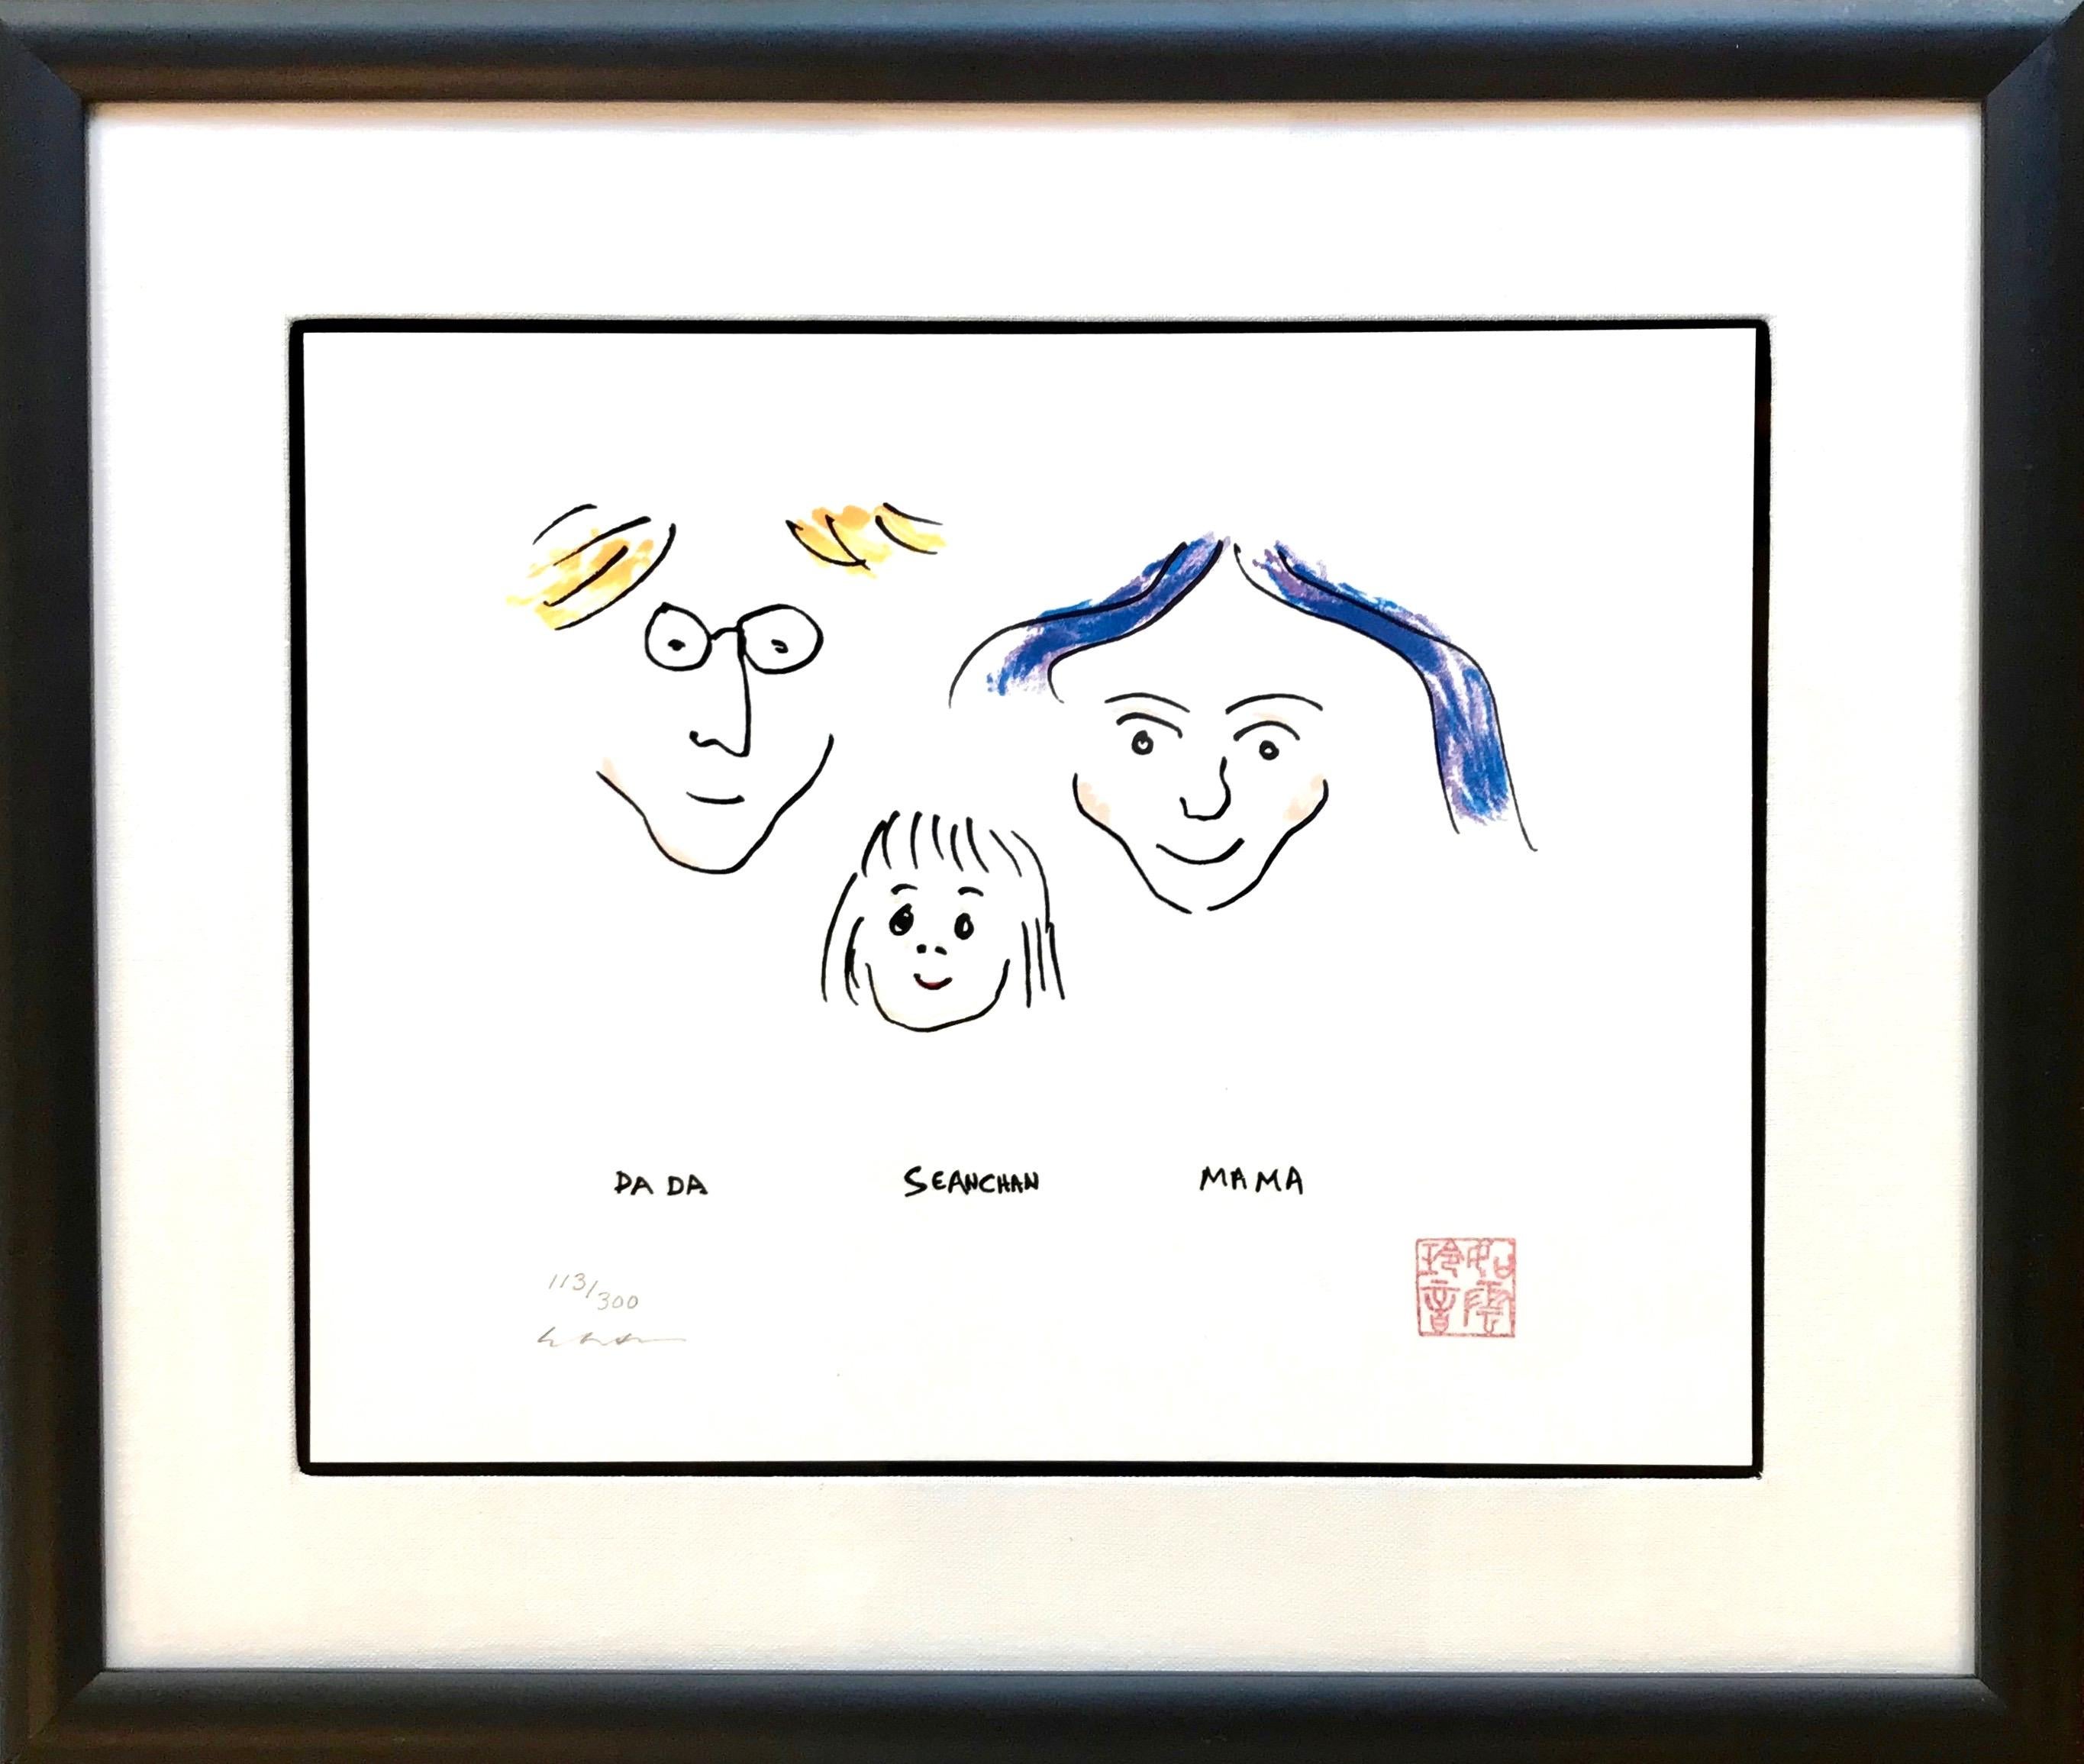 John Lennon Print - "DaDa MaMa"  Limited Edition Drawing of Lennon Family